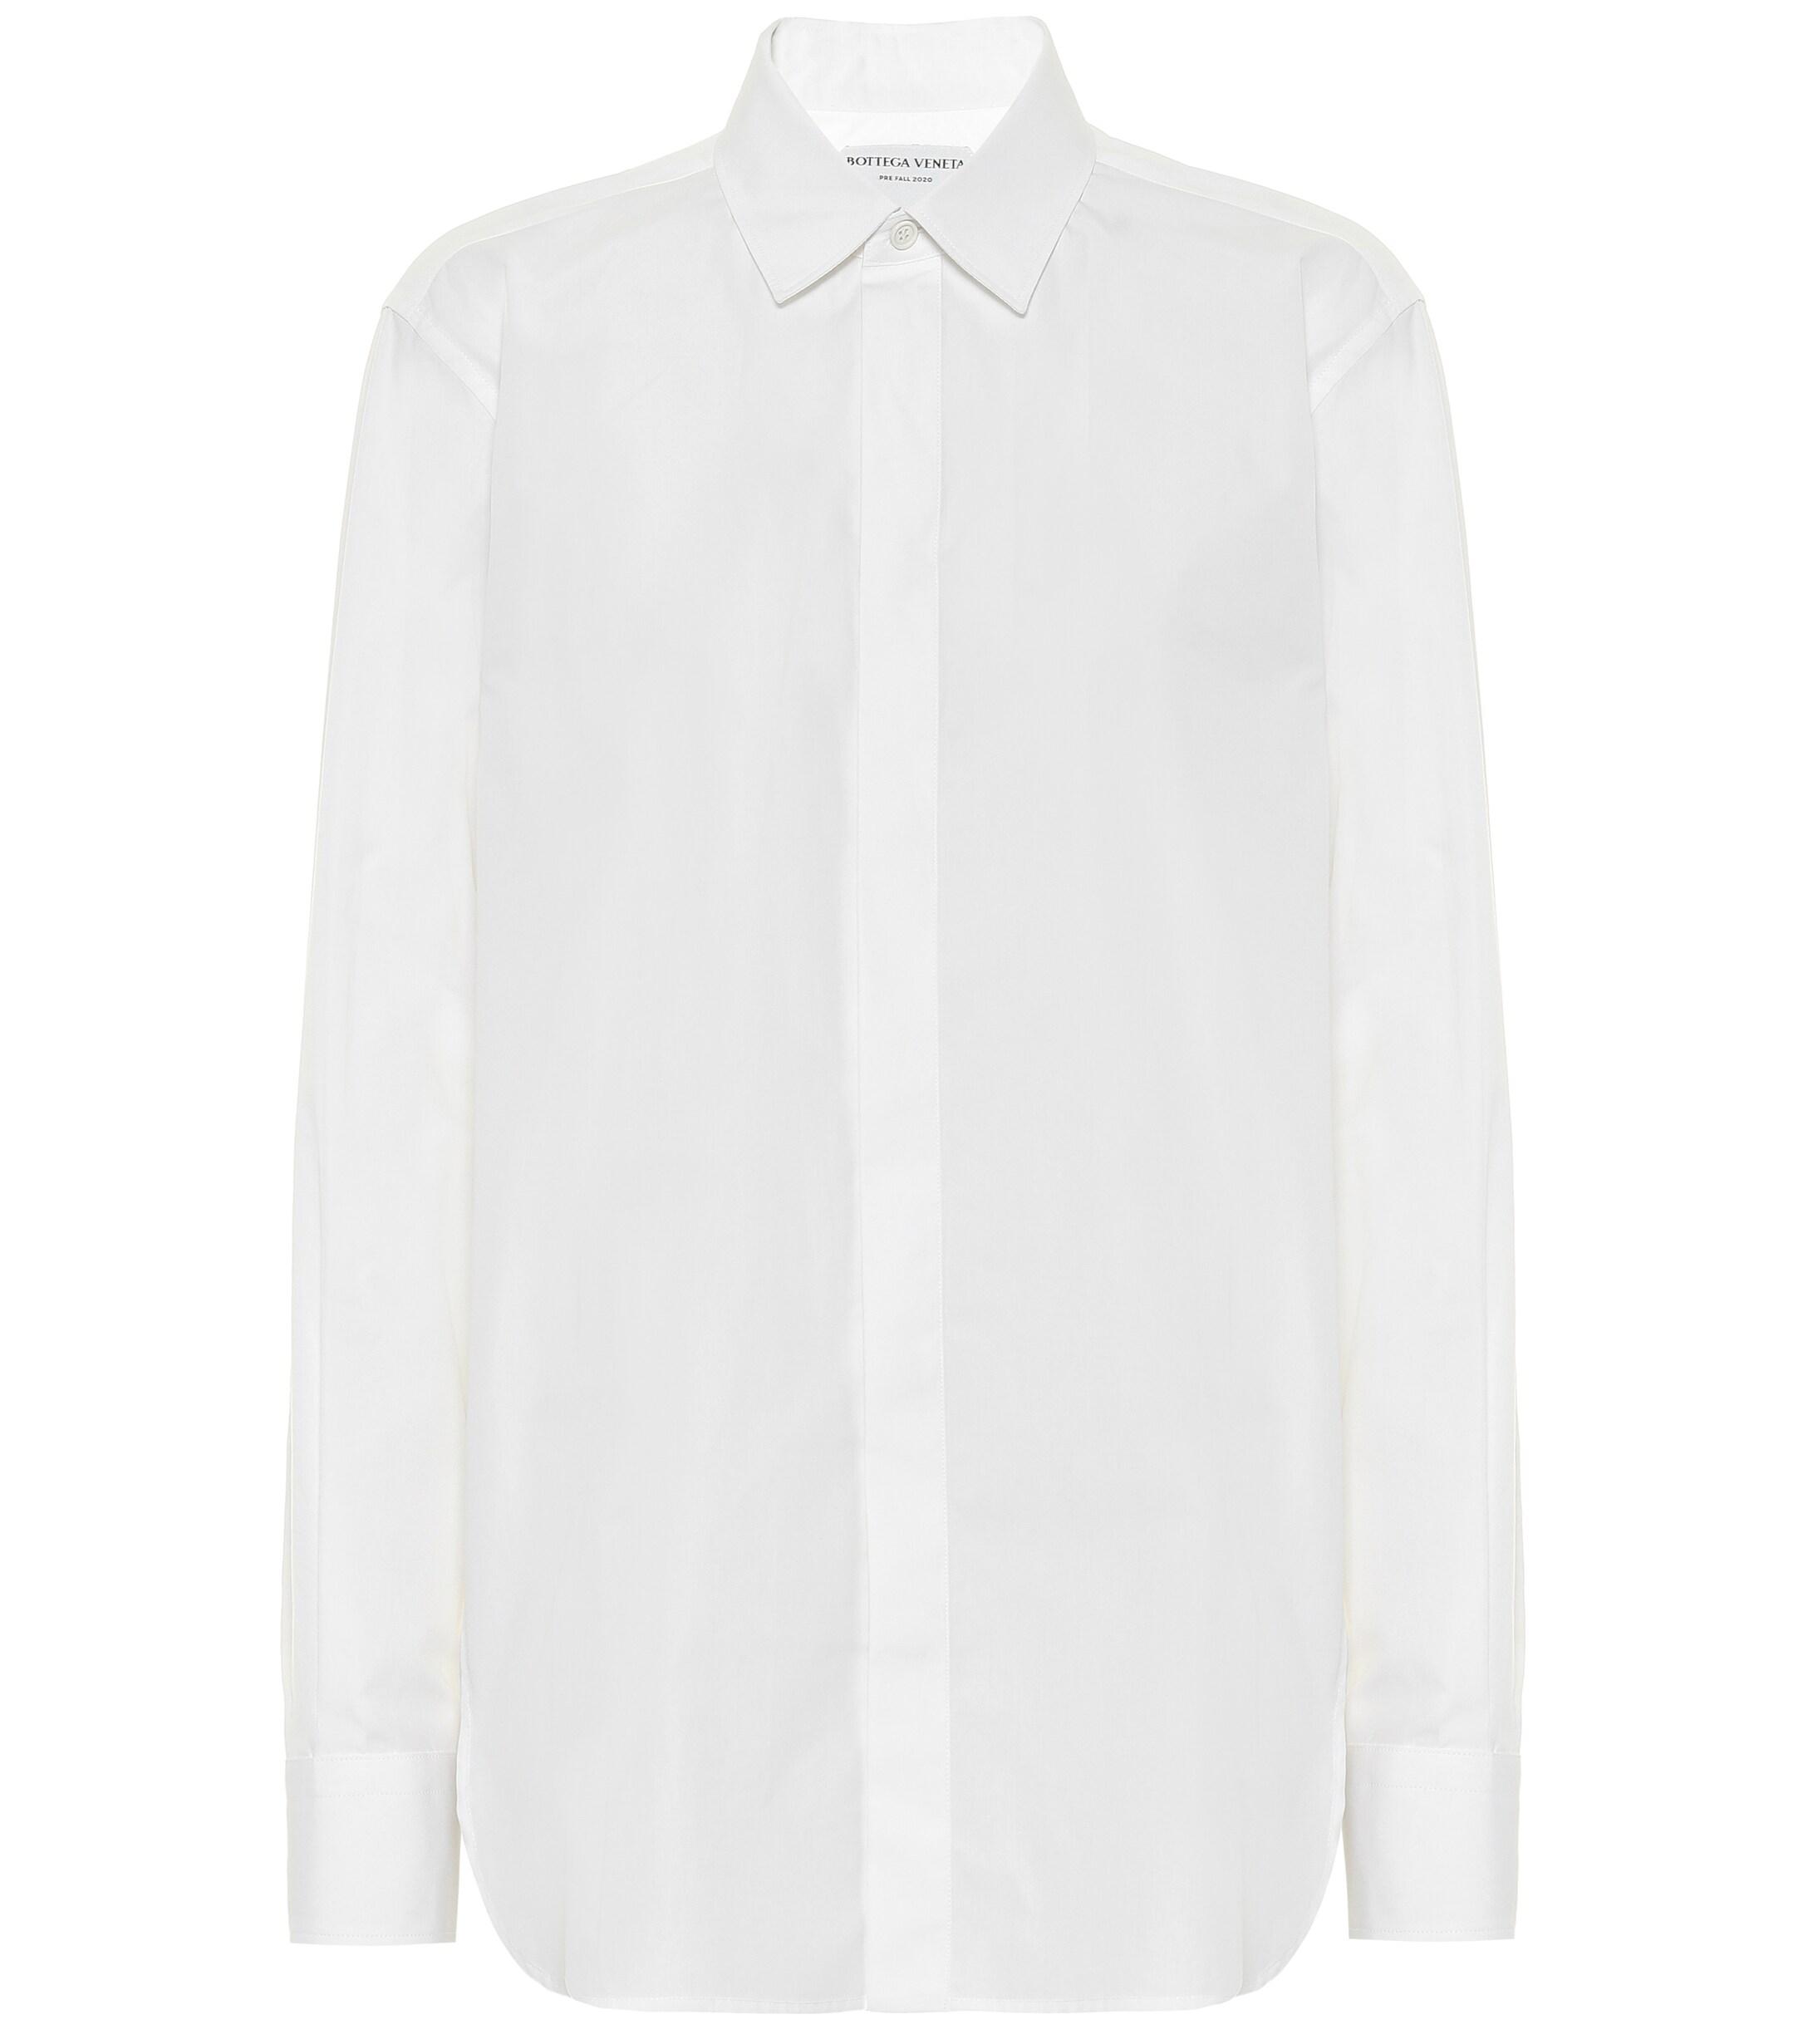 Bottega Veneta Cotton-poplin Shirt in White - Lyst